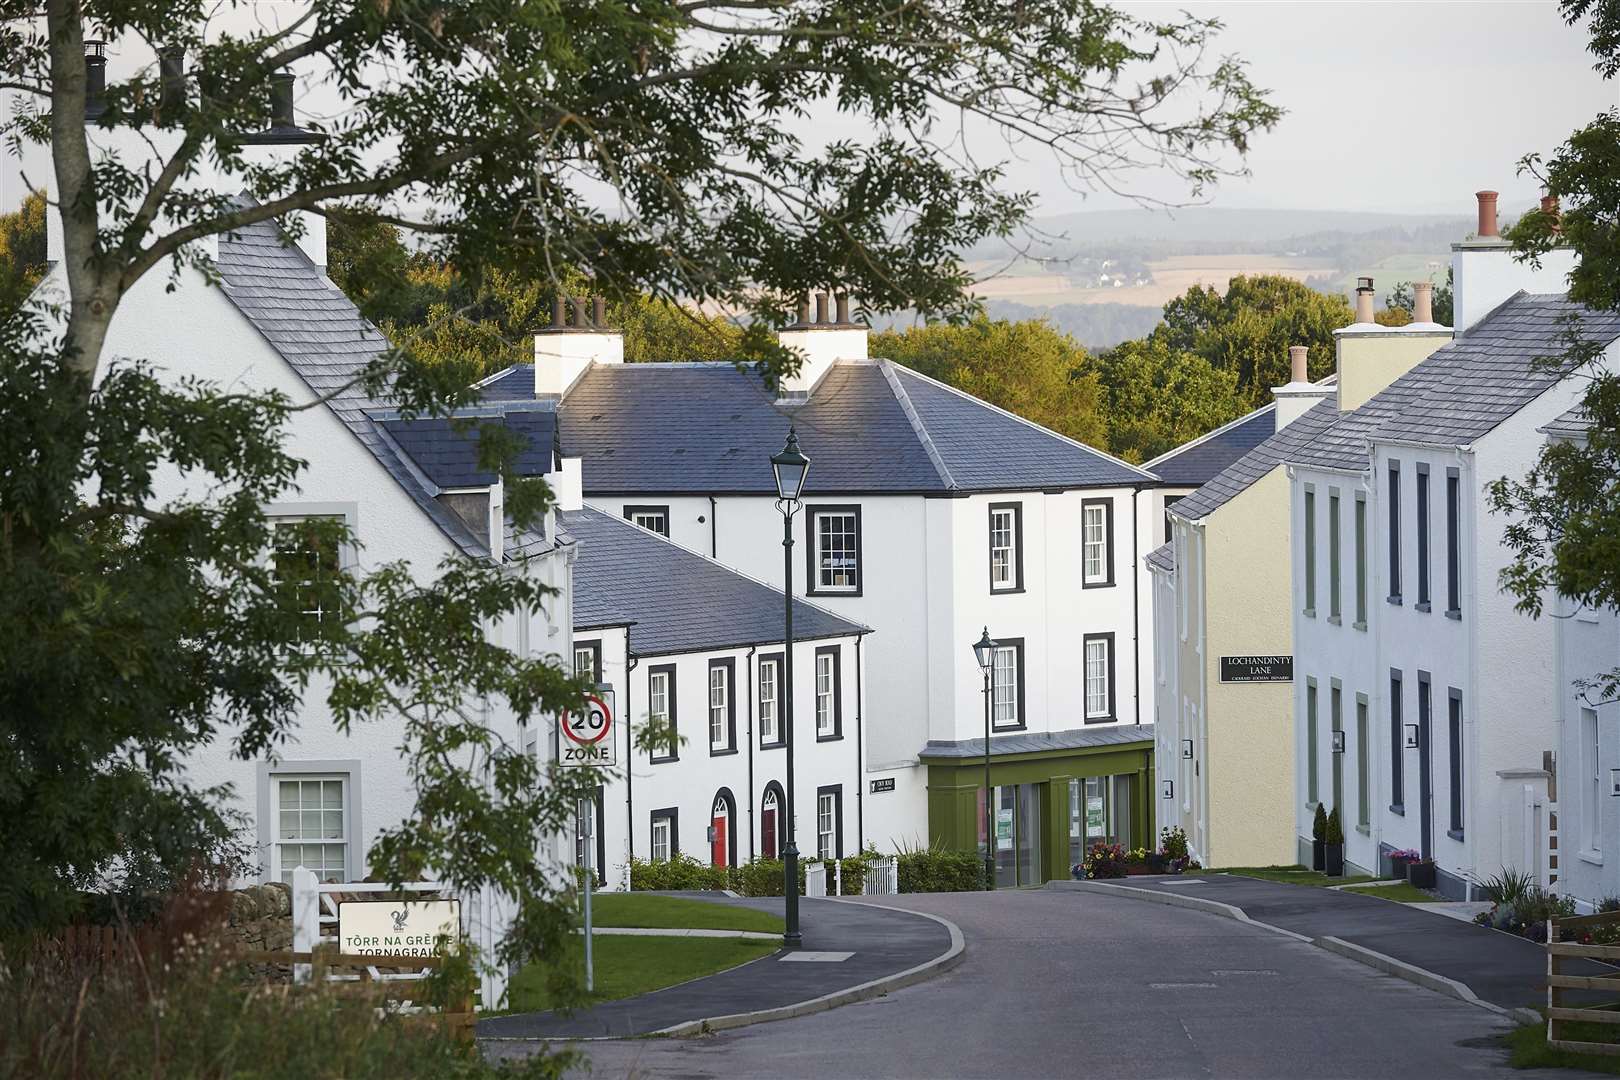 Moray Estates' Tornagrain development.